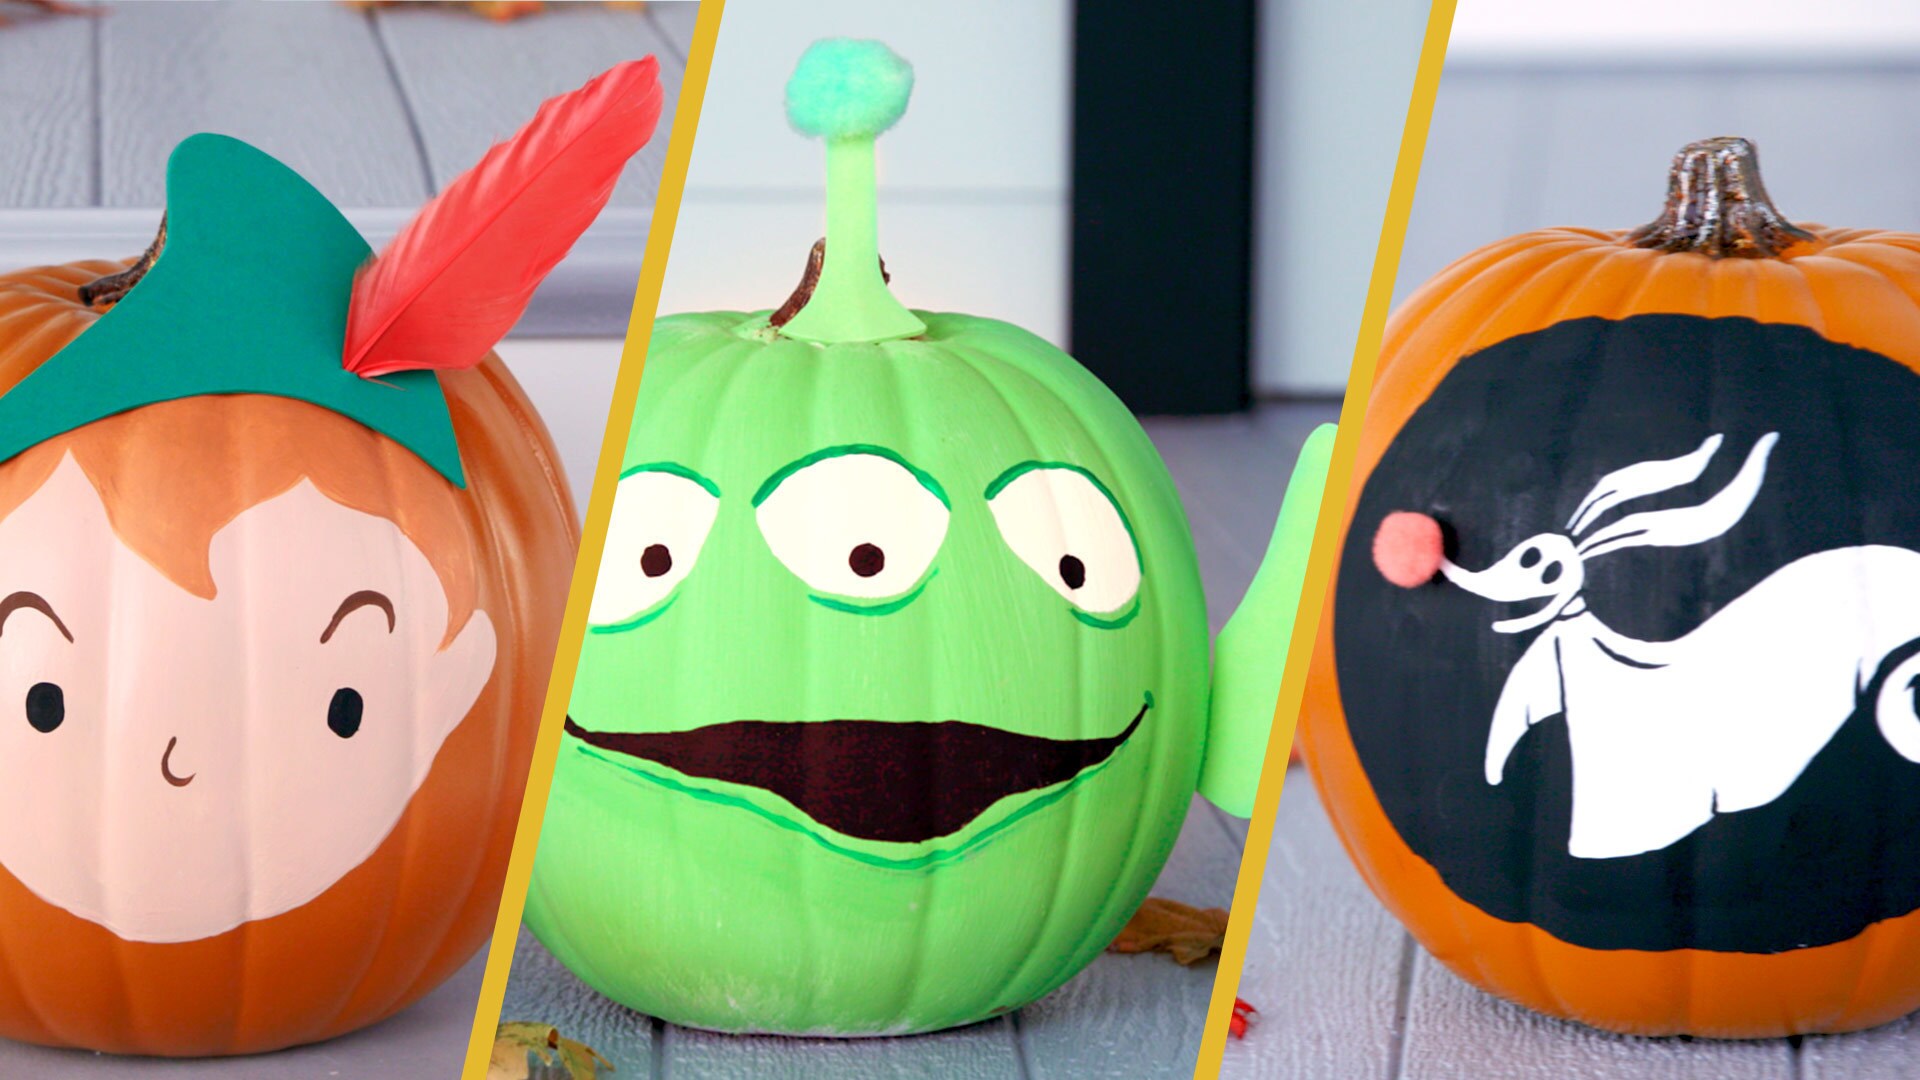 Disney-Themed Painted Pumpkins | Disney DIY by Disney Family